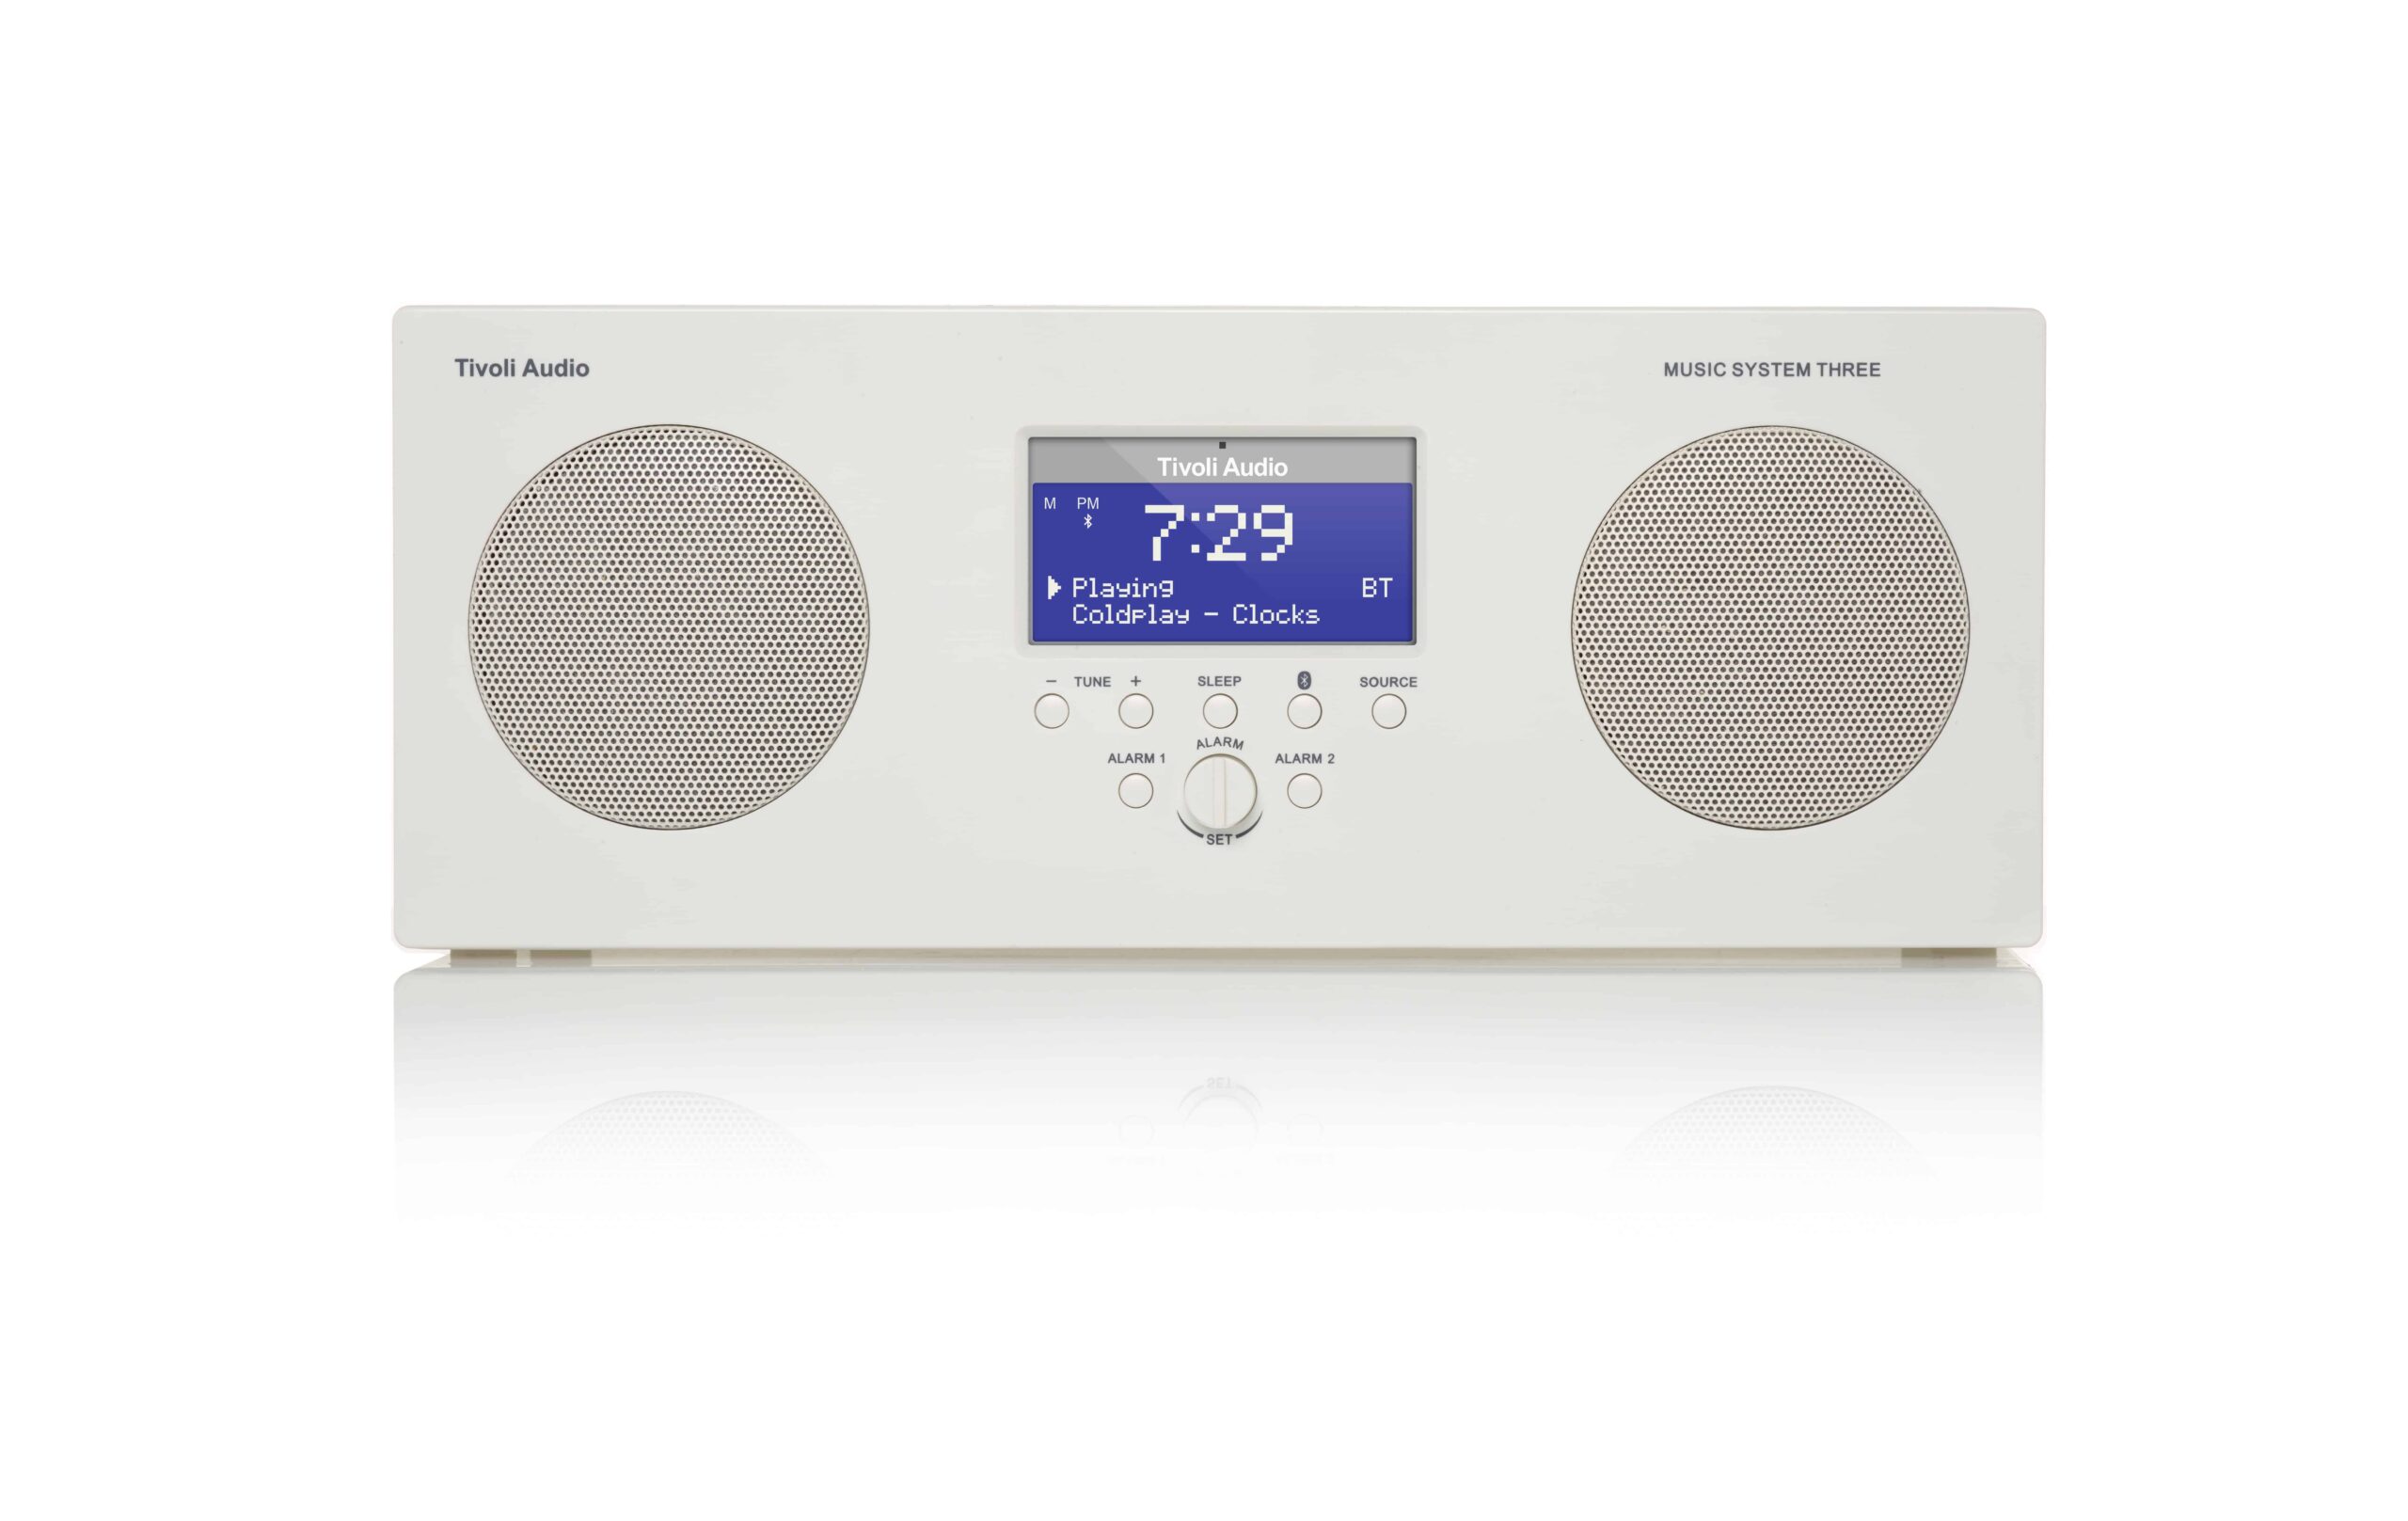 Tivoli Audio 815097016113 Tragbare Musik System Three mit Drahtlose Bluetooth-Technologie Schwarz 